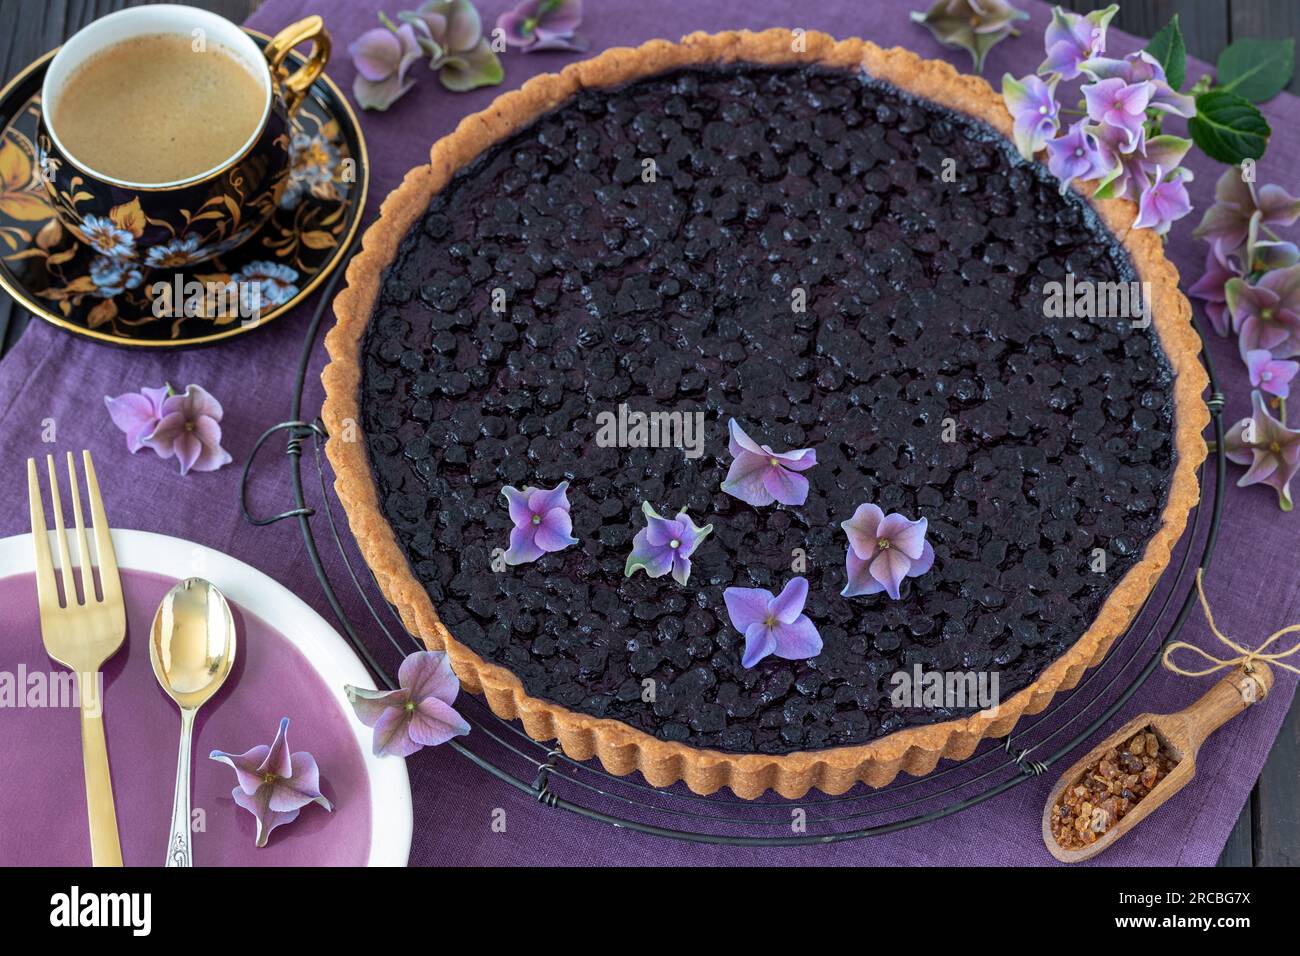 vegan blueberry tart decorated with hydrangea flowers Stock Photo